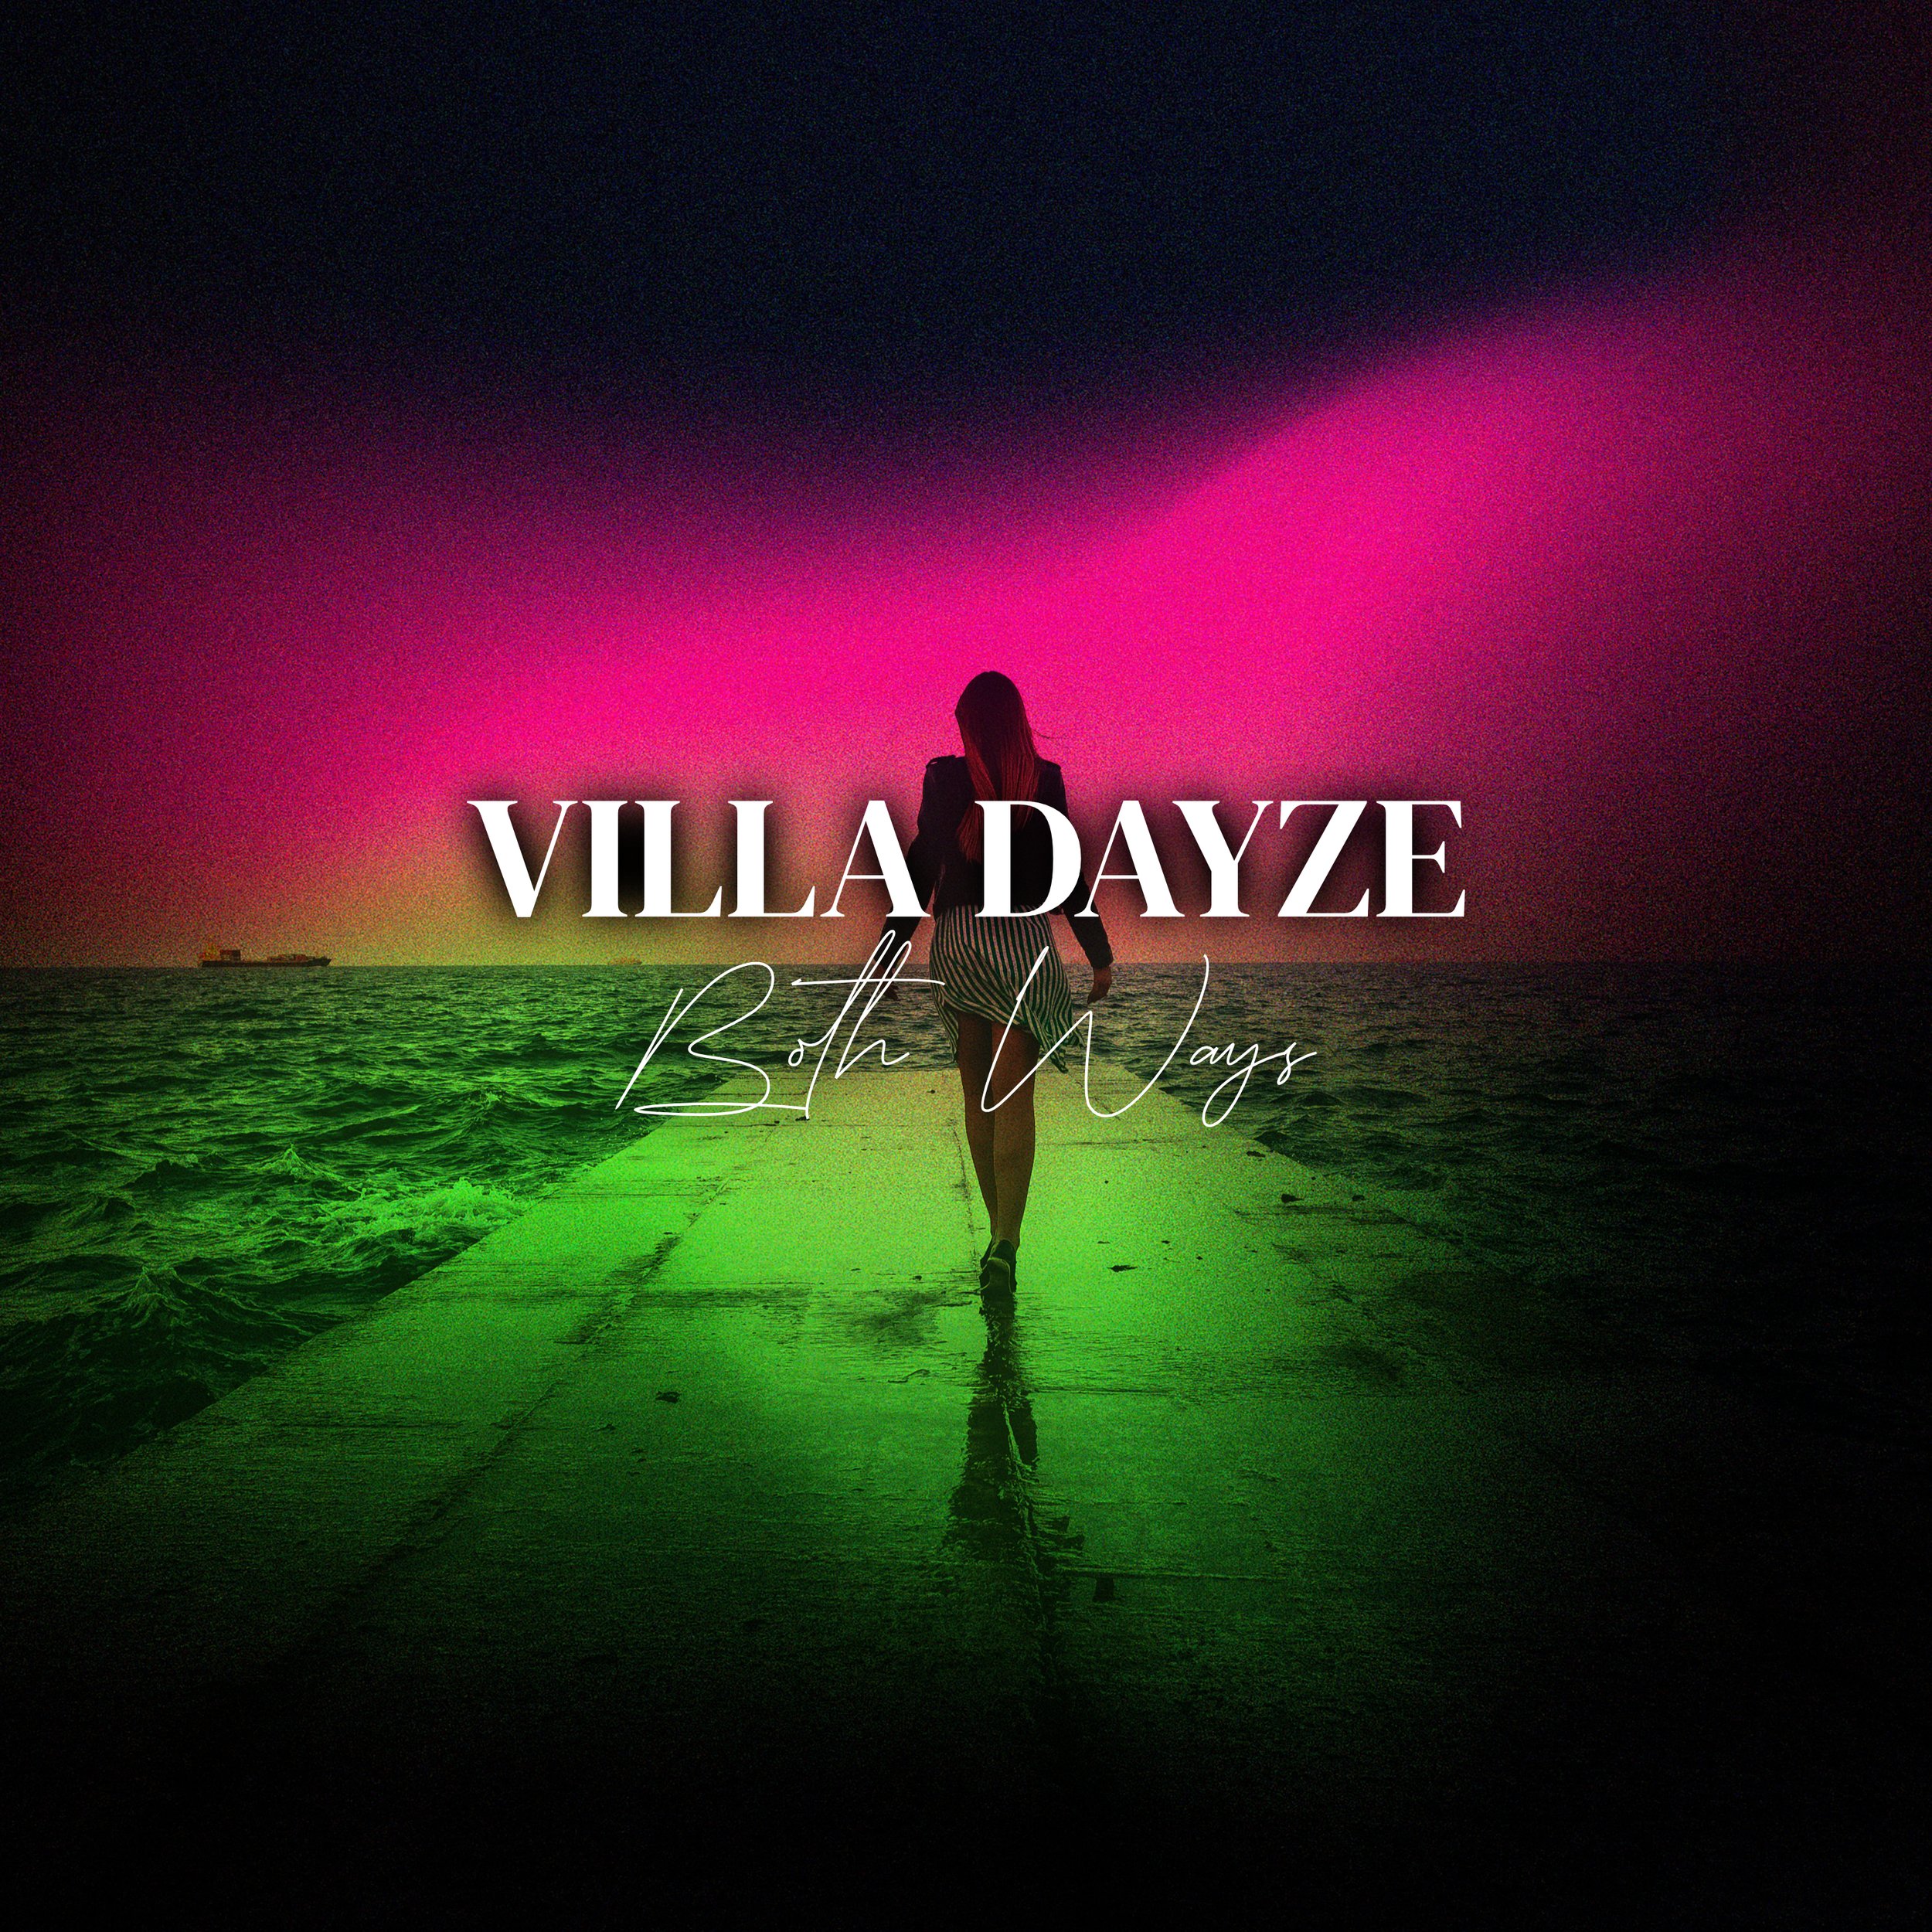 Villa Dayze - Both Ways Artwork (1).jpg